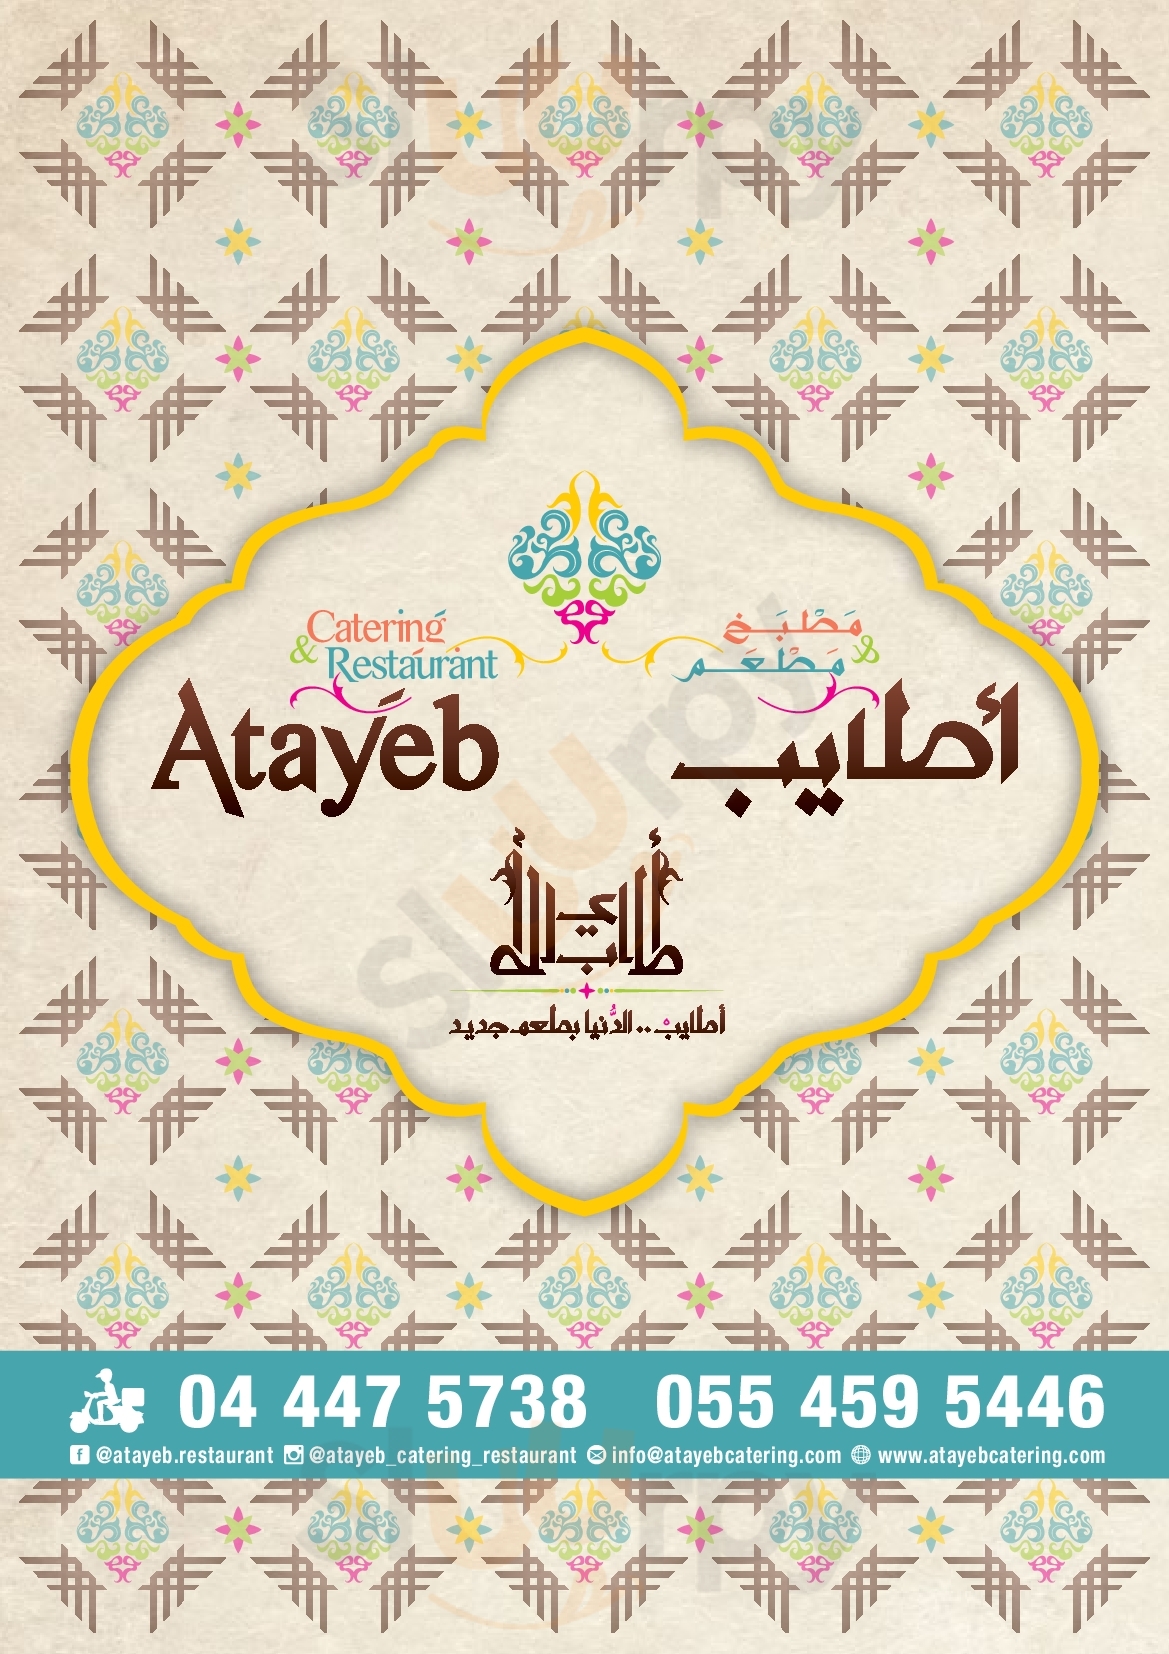 ‪atayeb Restaurant‬ دُبي Menu - 1